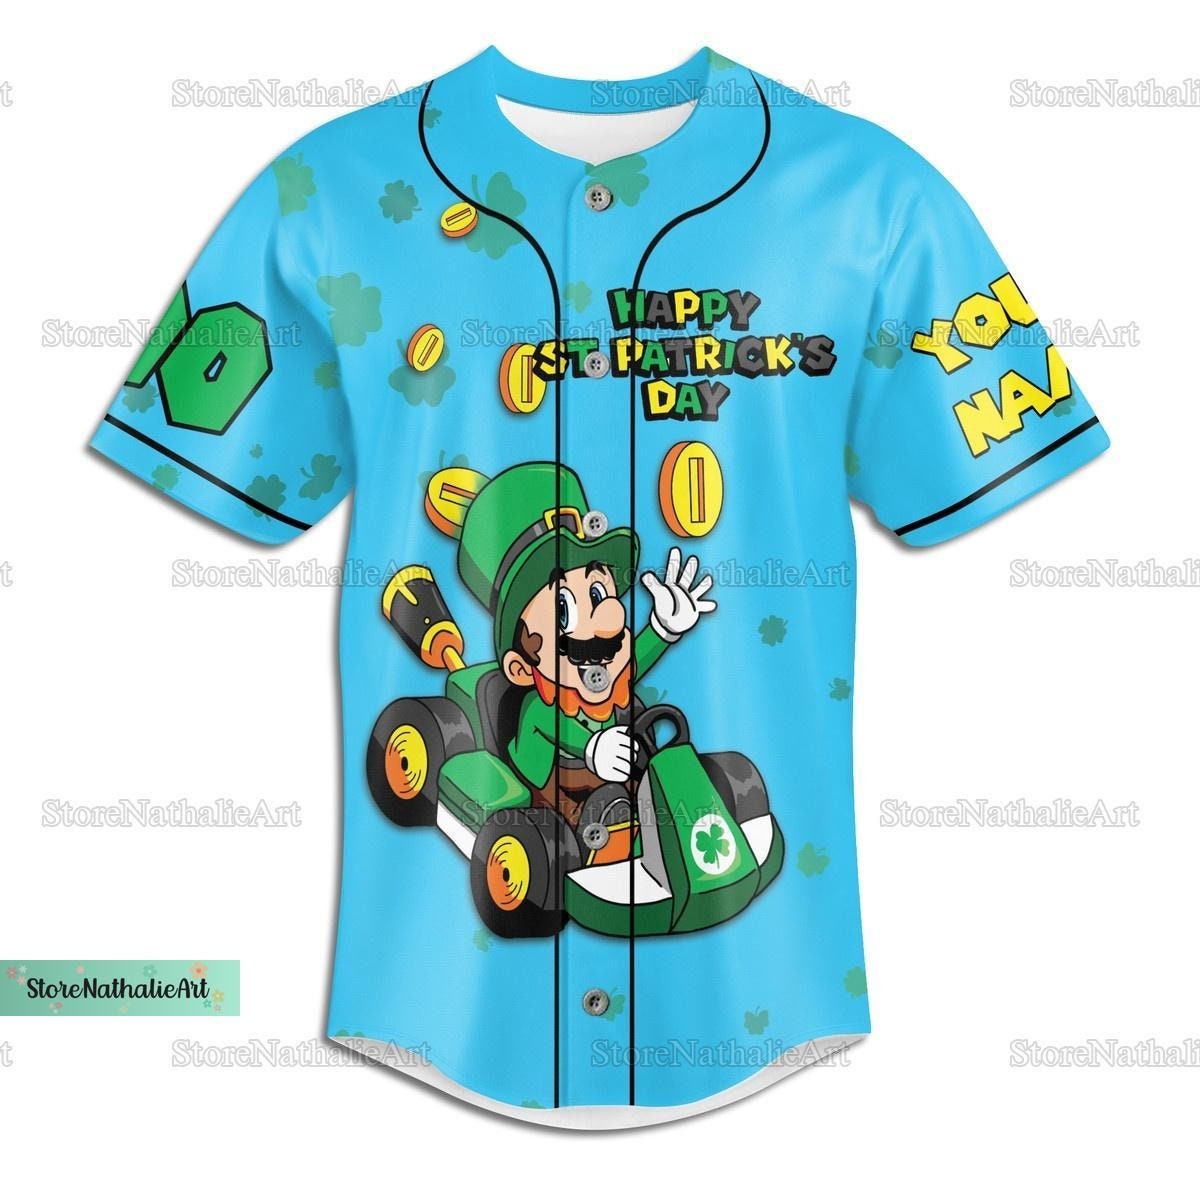 Super Mario Jersey Shirt, Super Mario Baseball Jersey